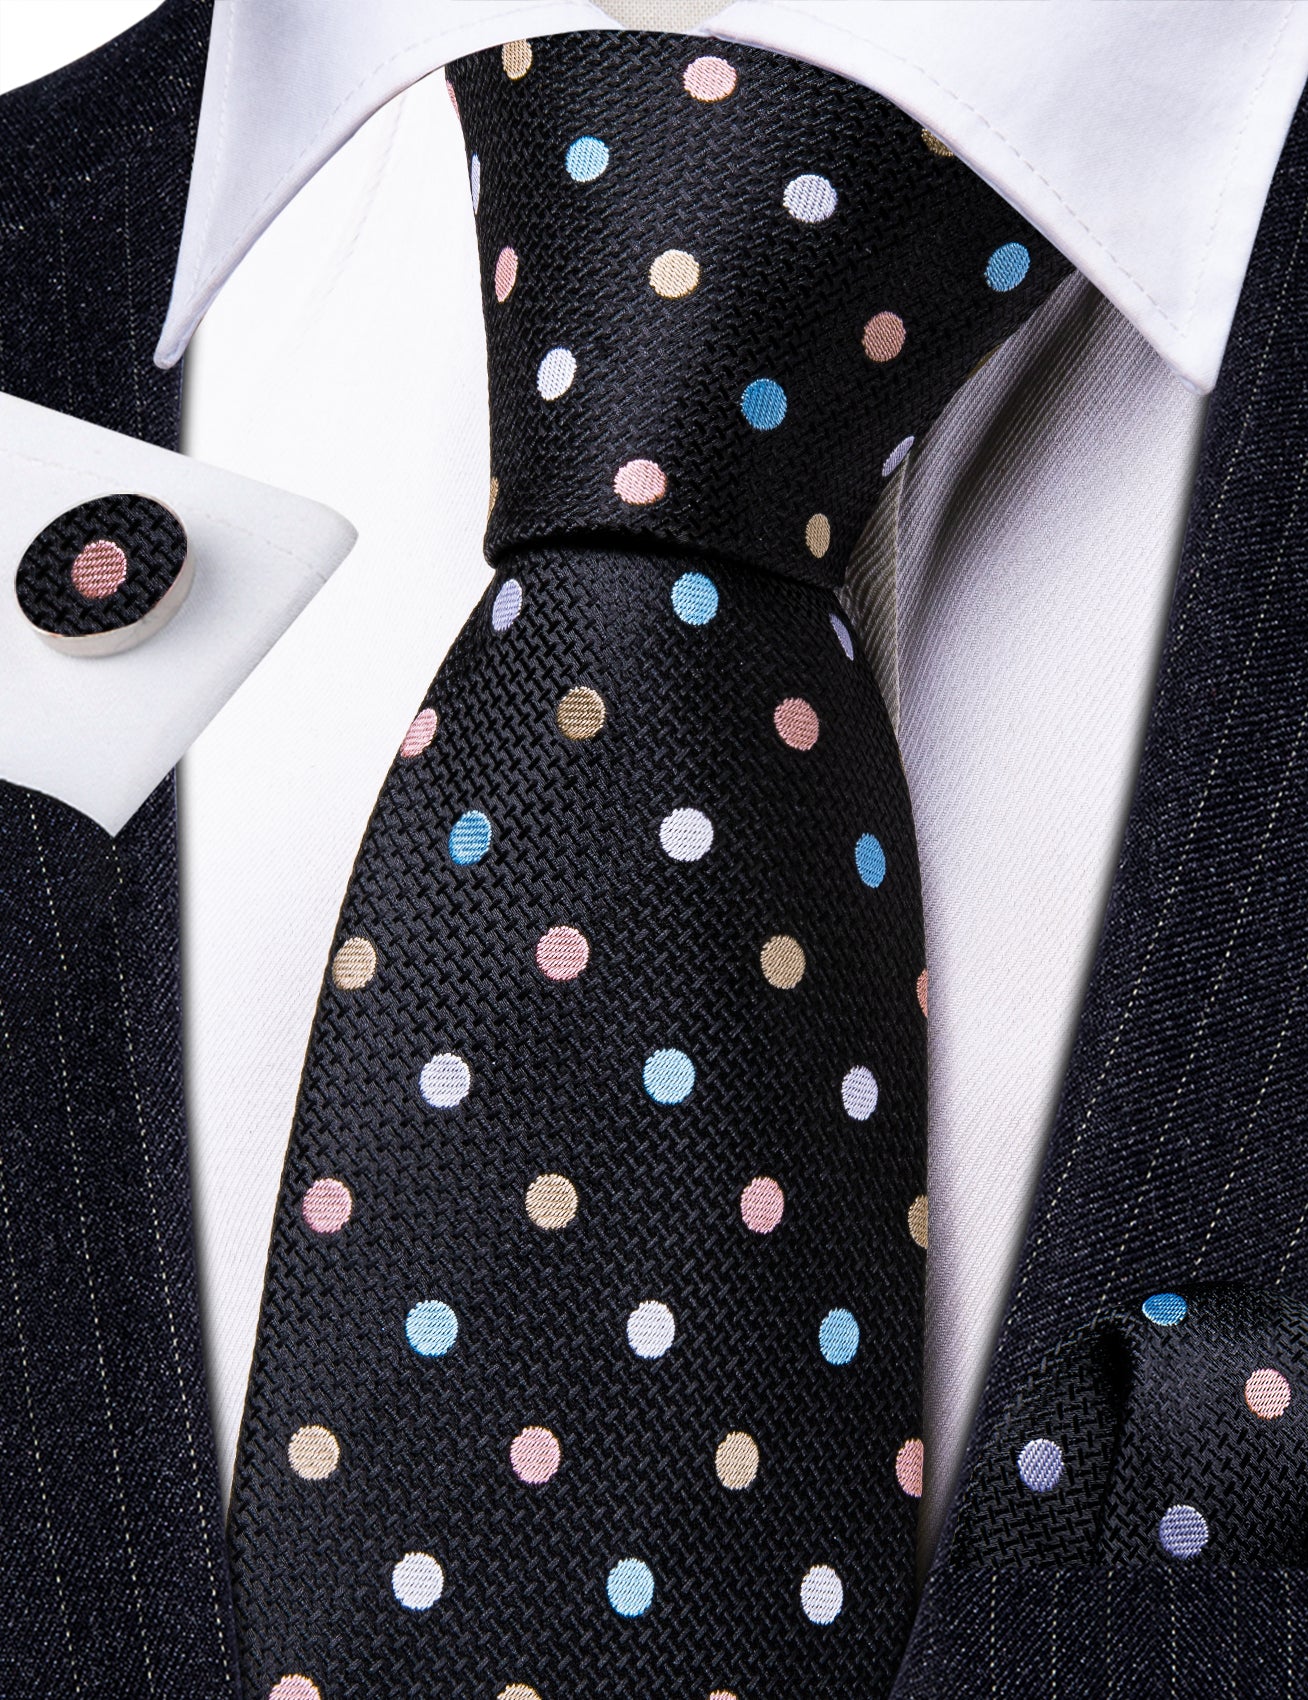 Mens necktie black white lines suit blazer 